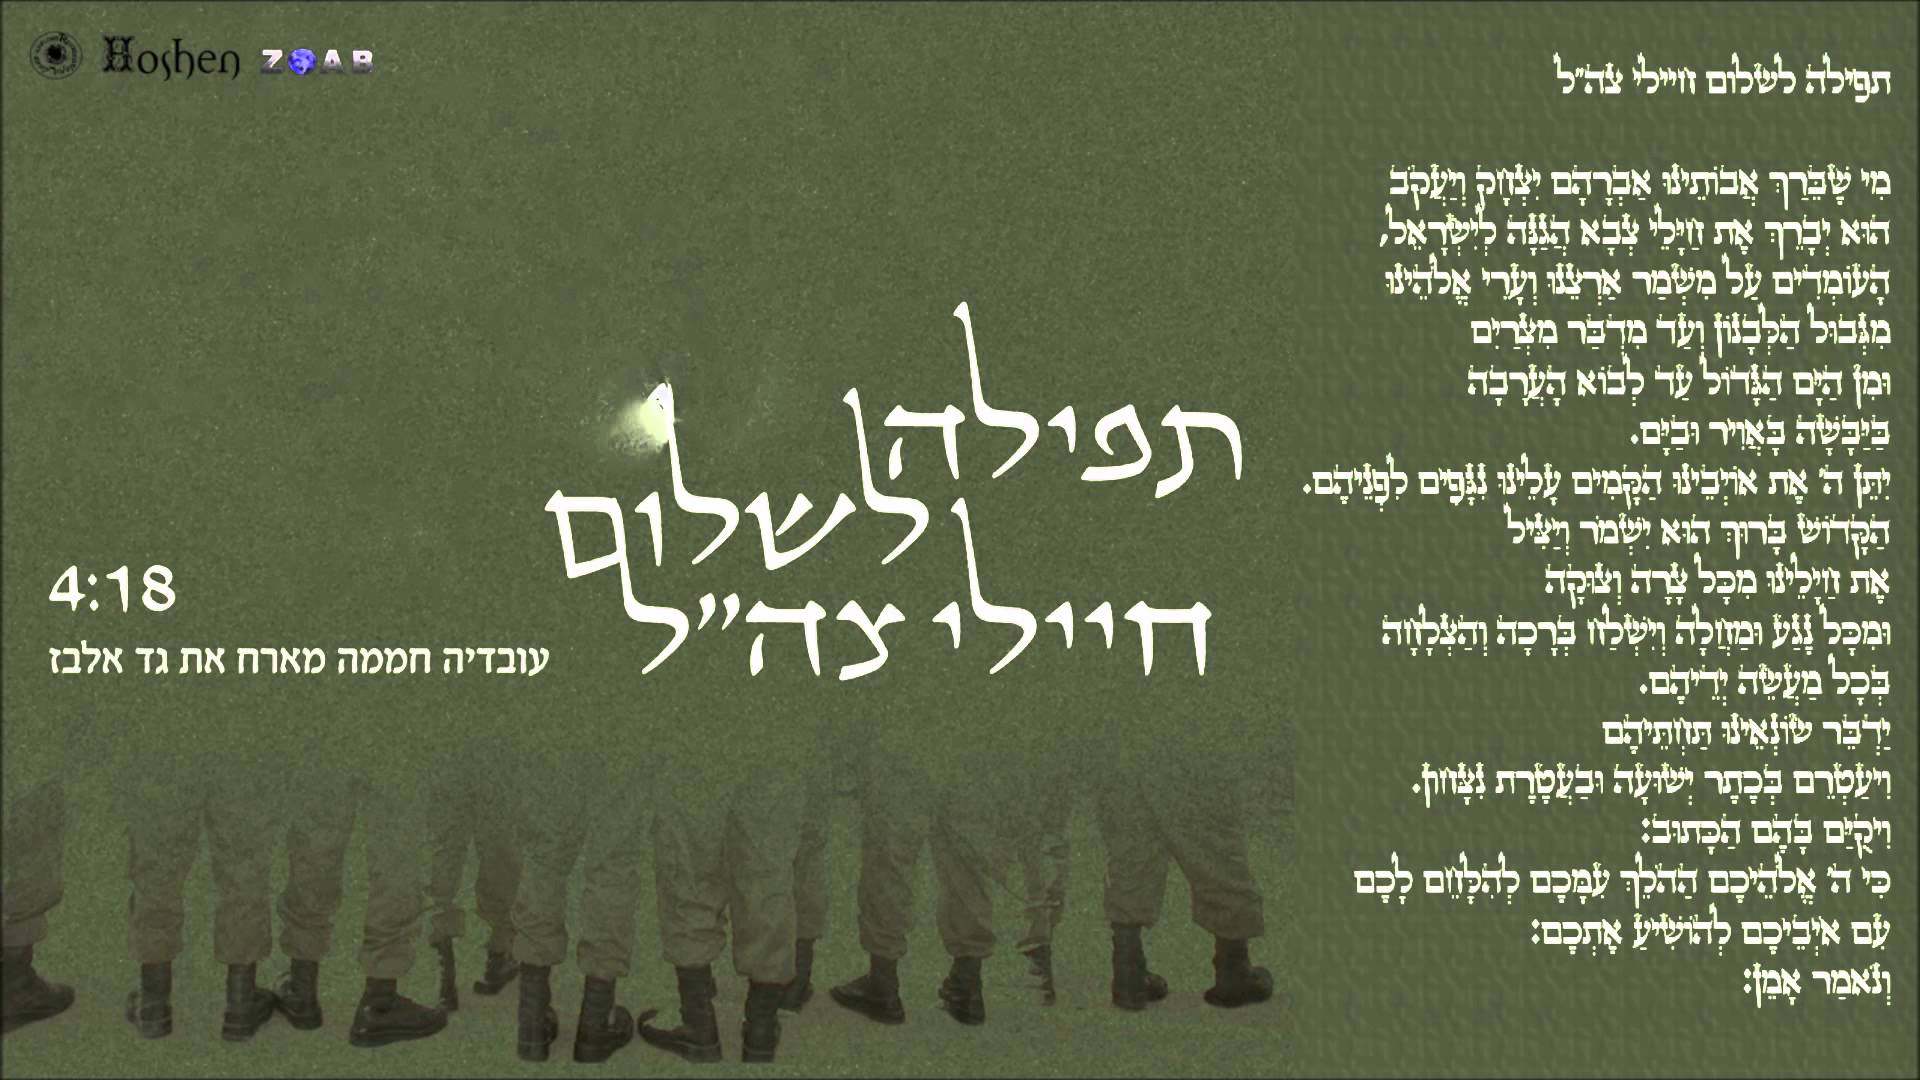 Gad Elbaz: The Prayer for the IDF